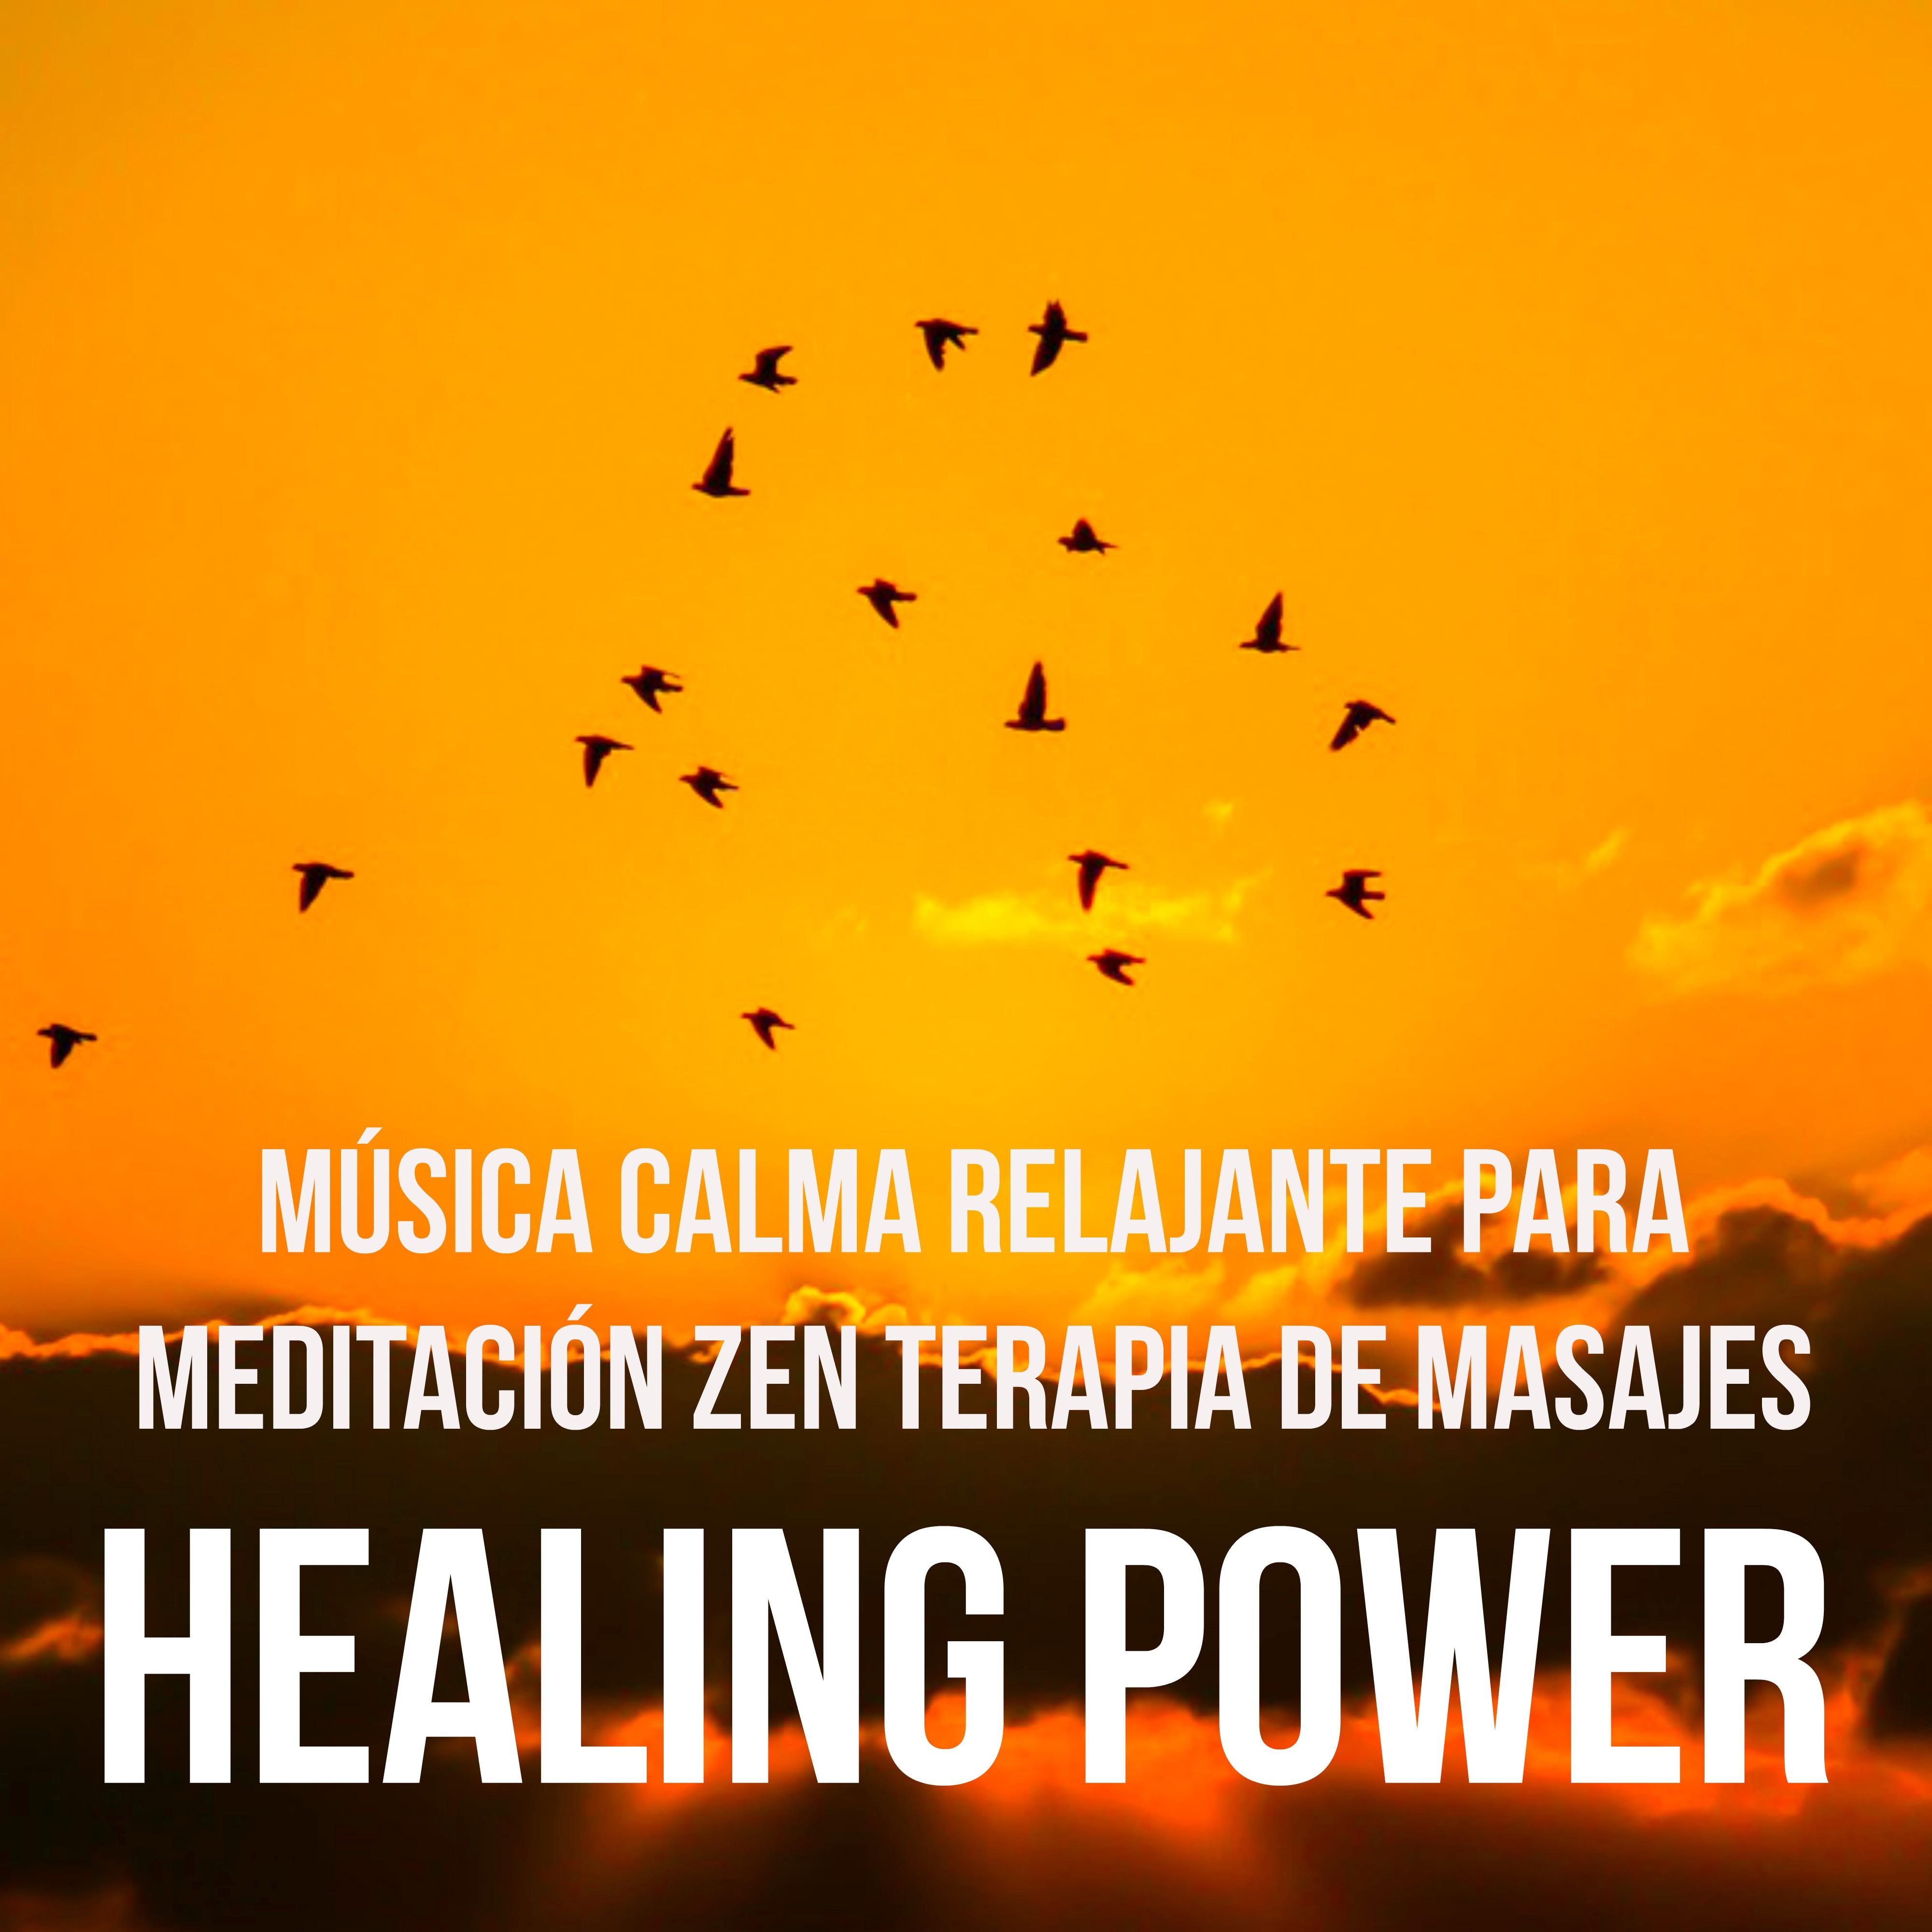 Healing Power